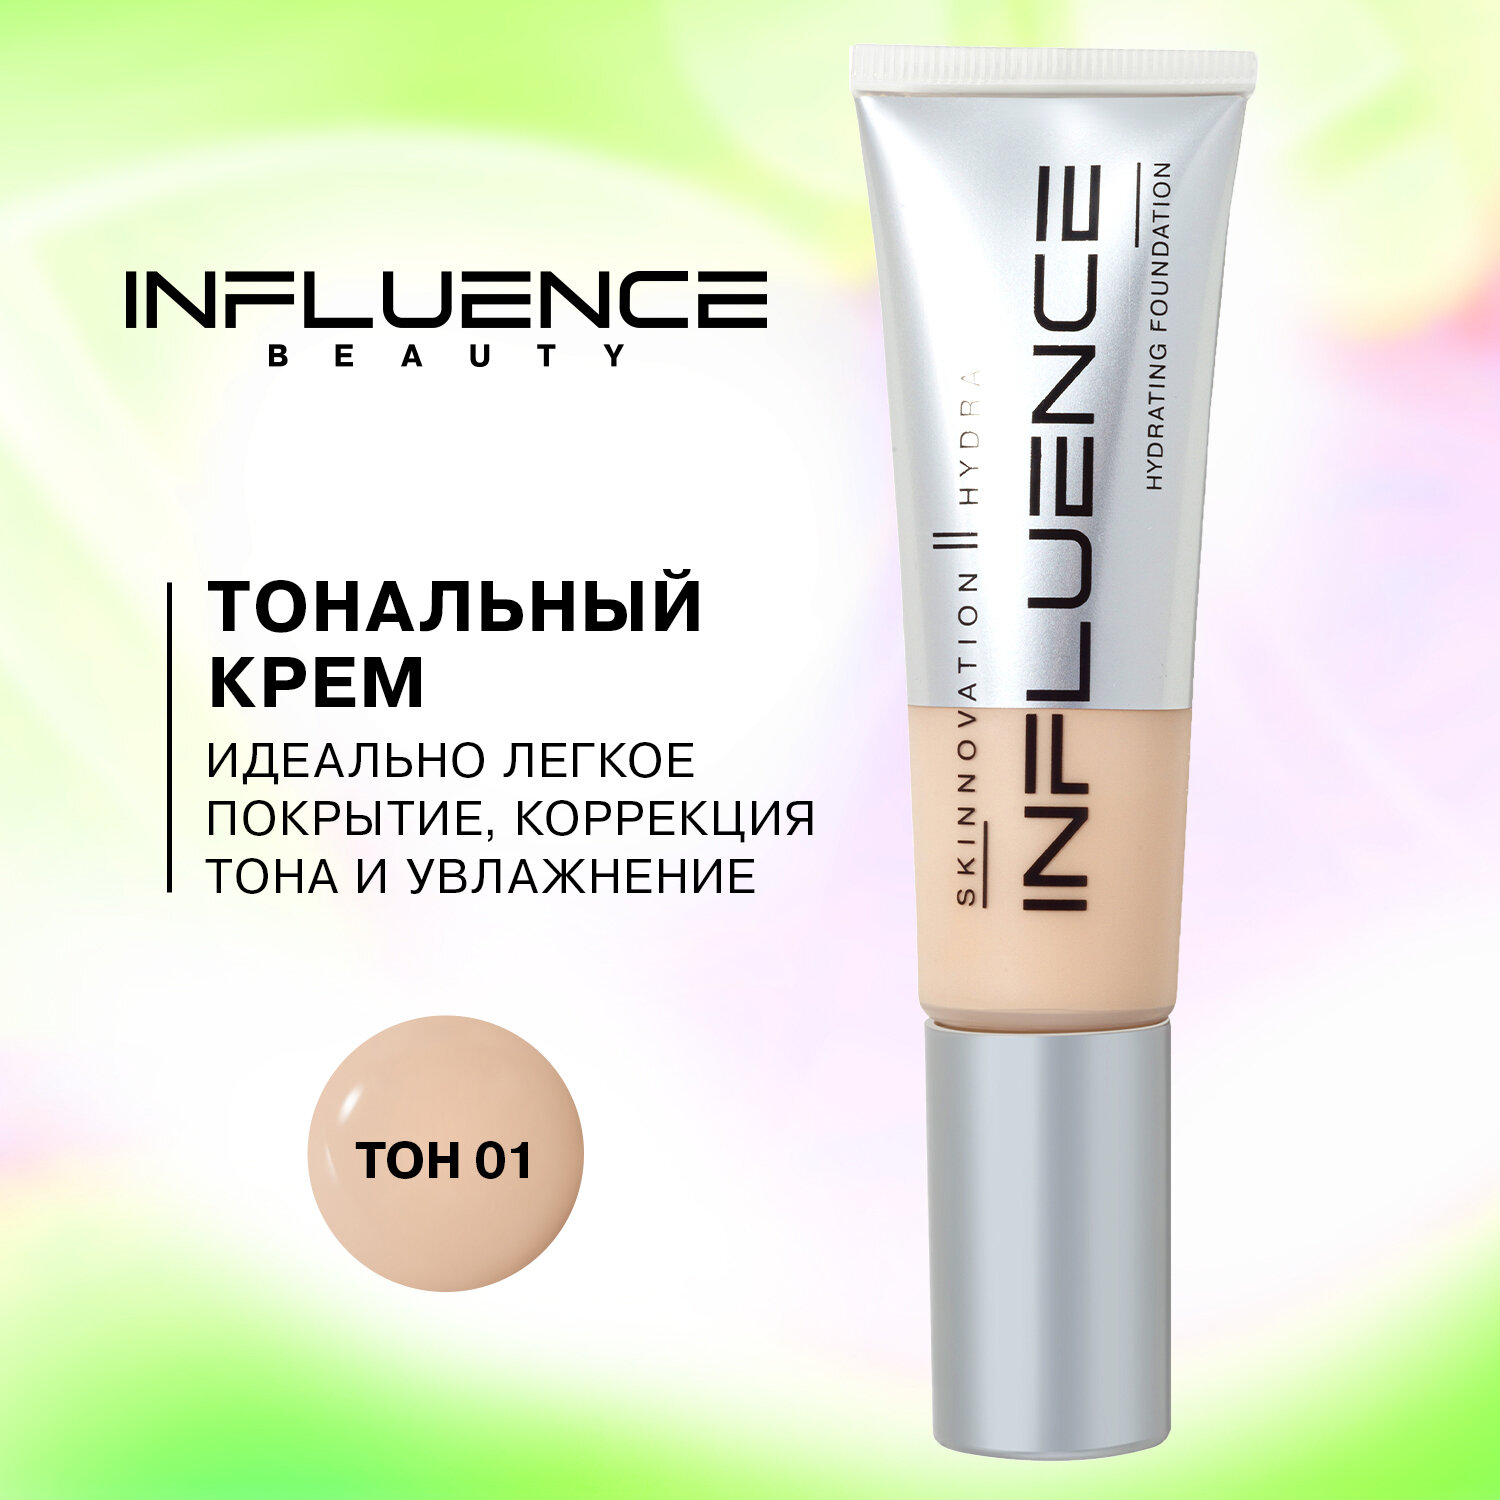 Influence Beauty   Skinnovation ii hydra , ,   ,  01 ultra light